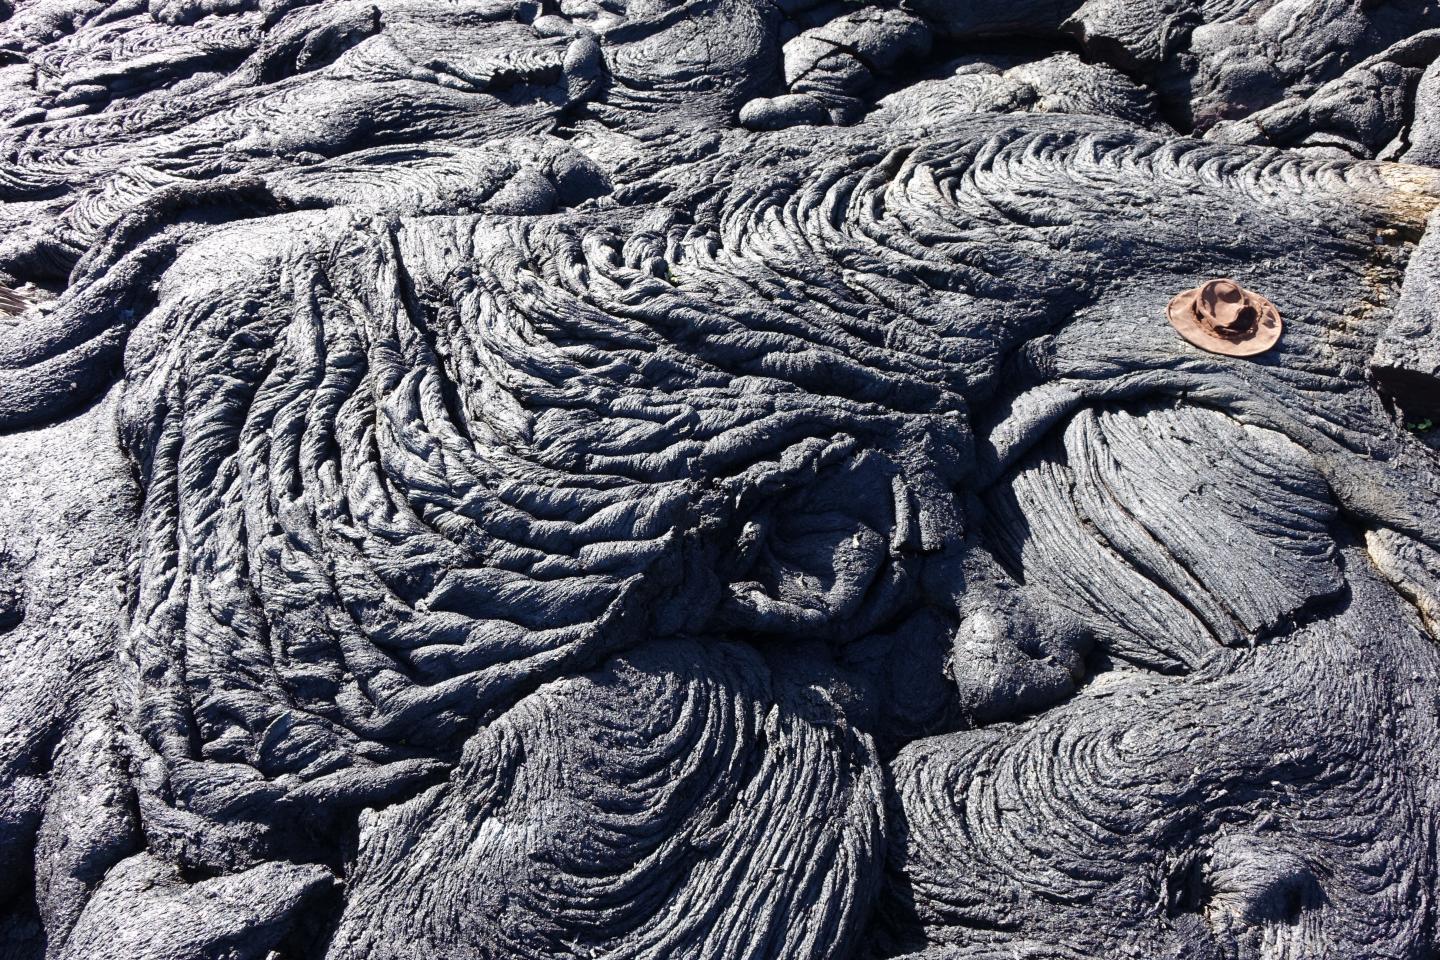 Ropy Basaltic Flows in Hawaii